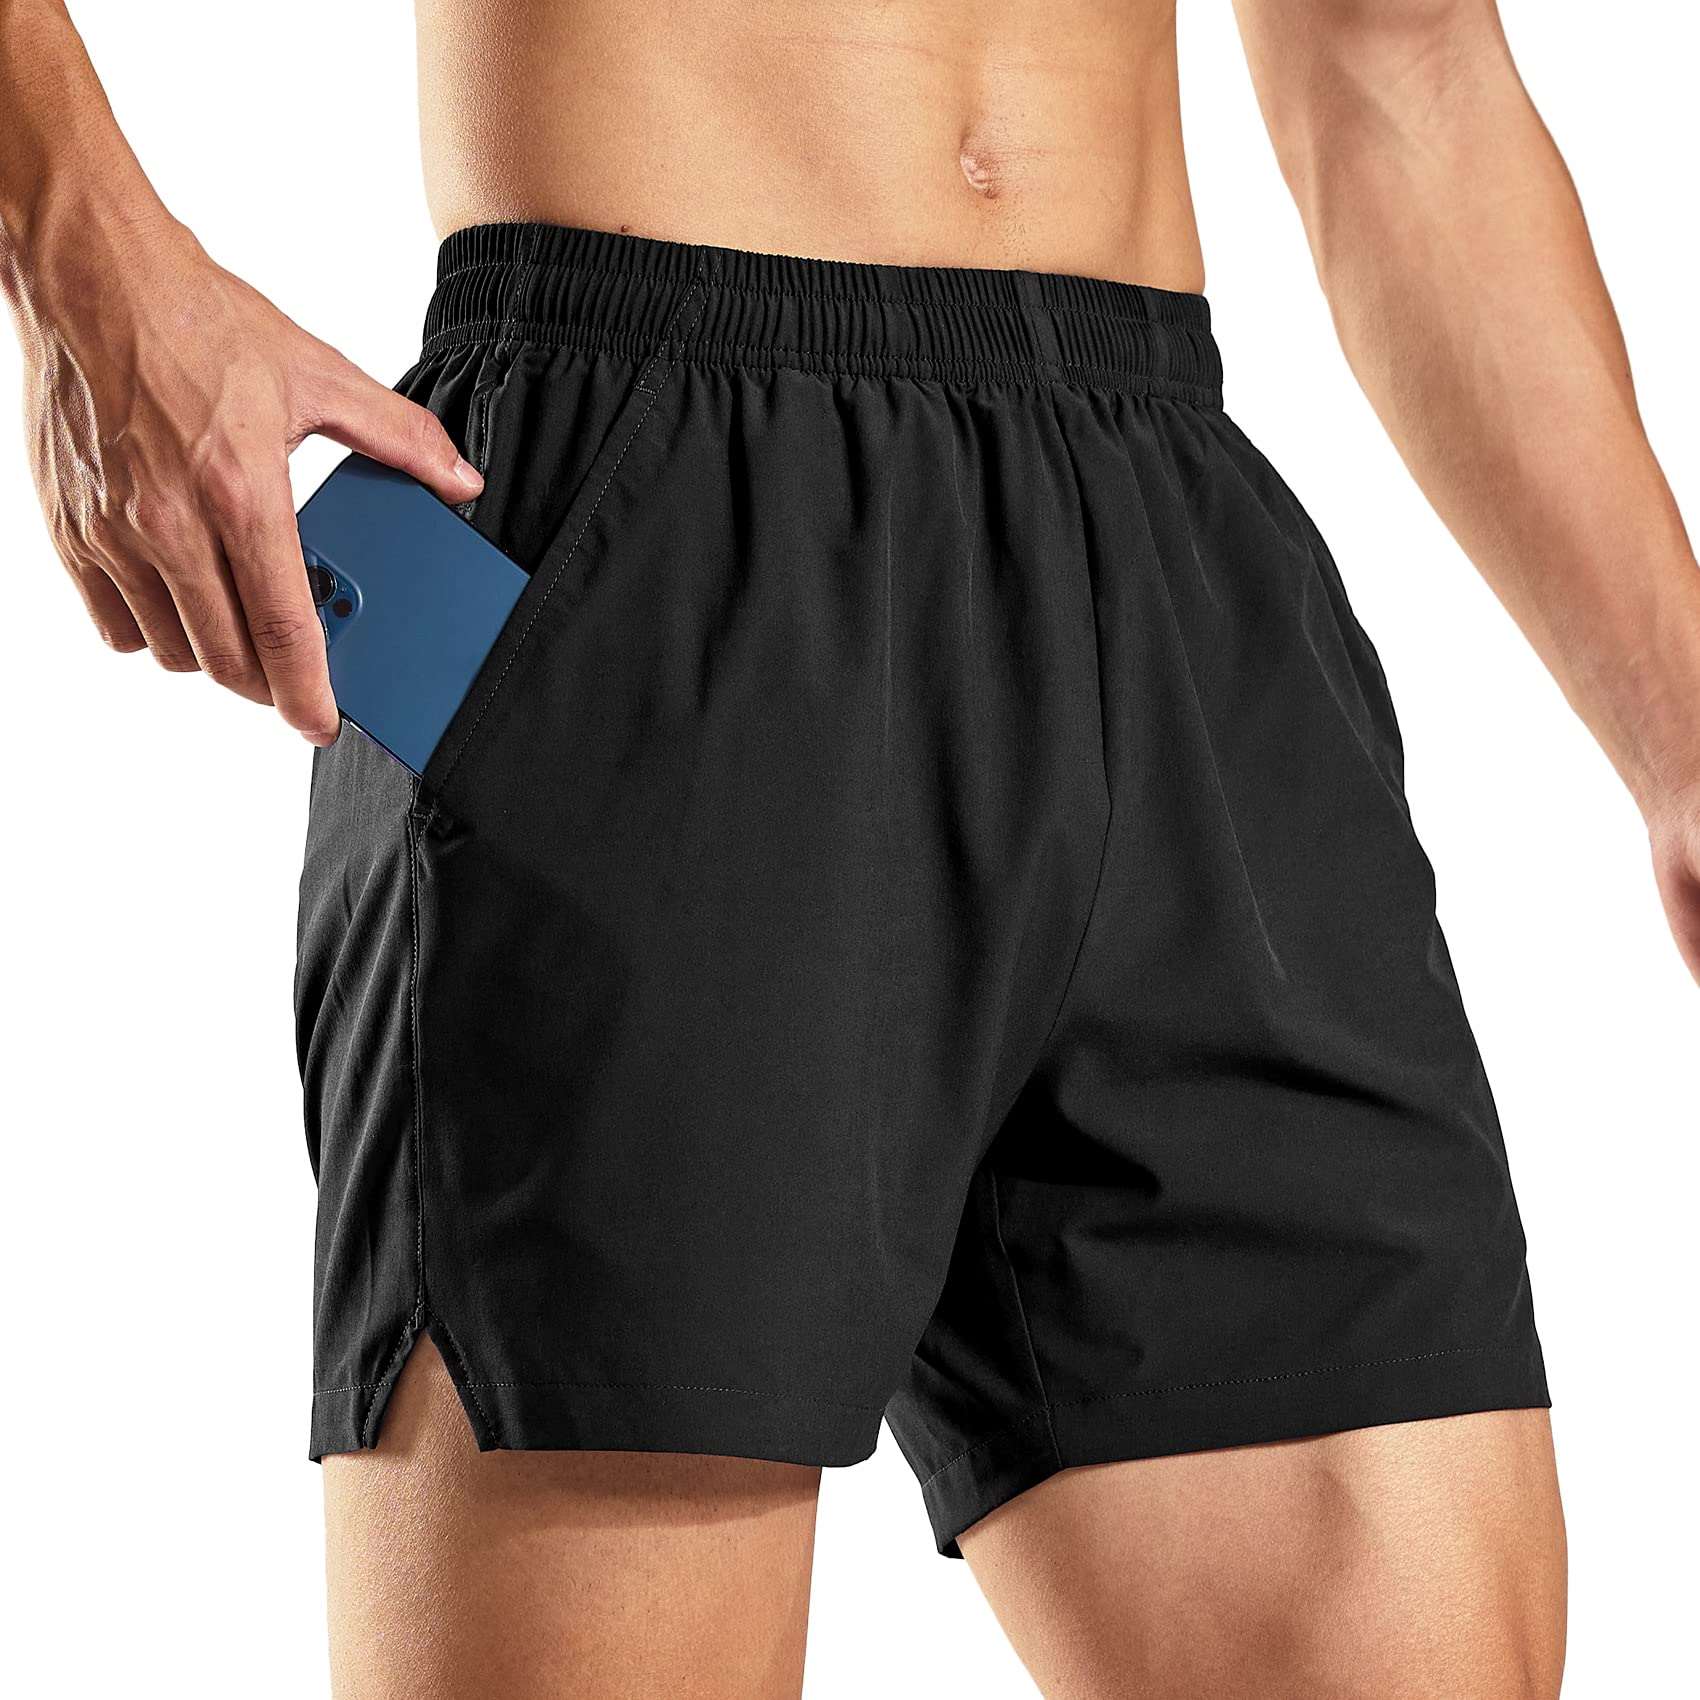 Men's Athletic & Gym Shorts